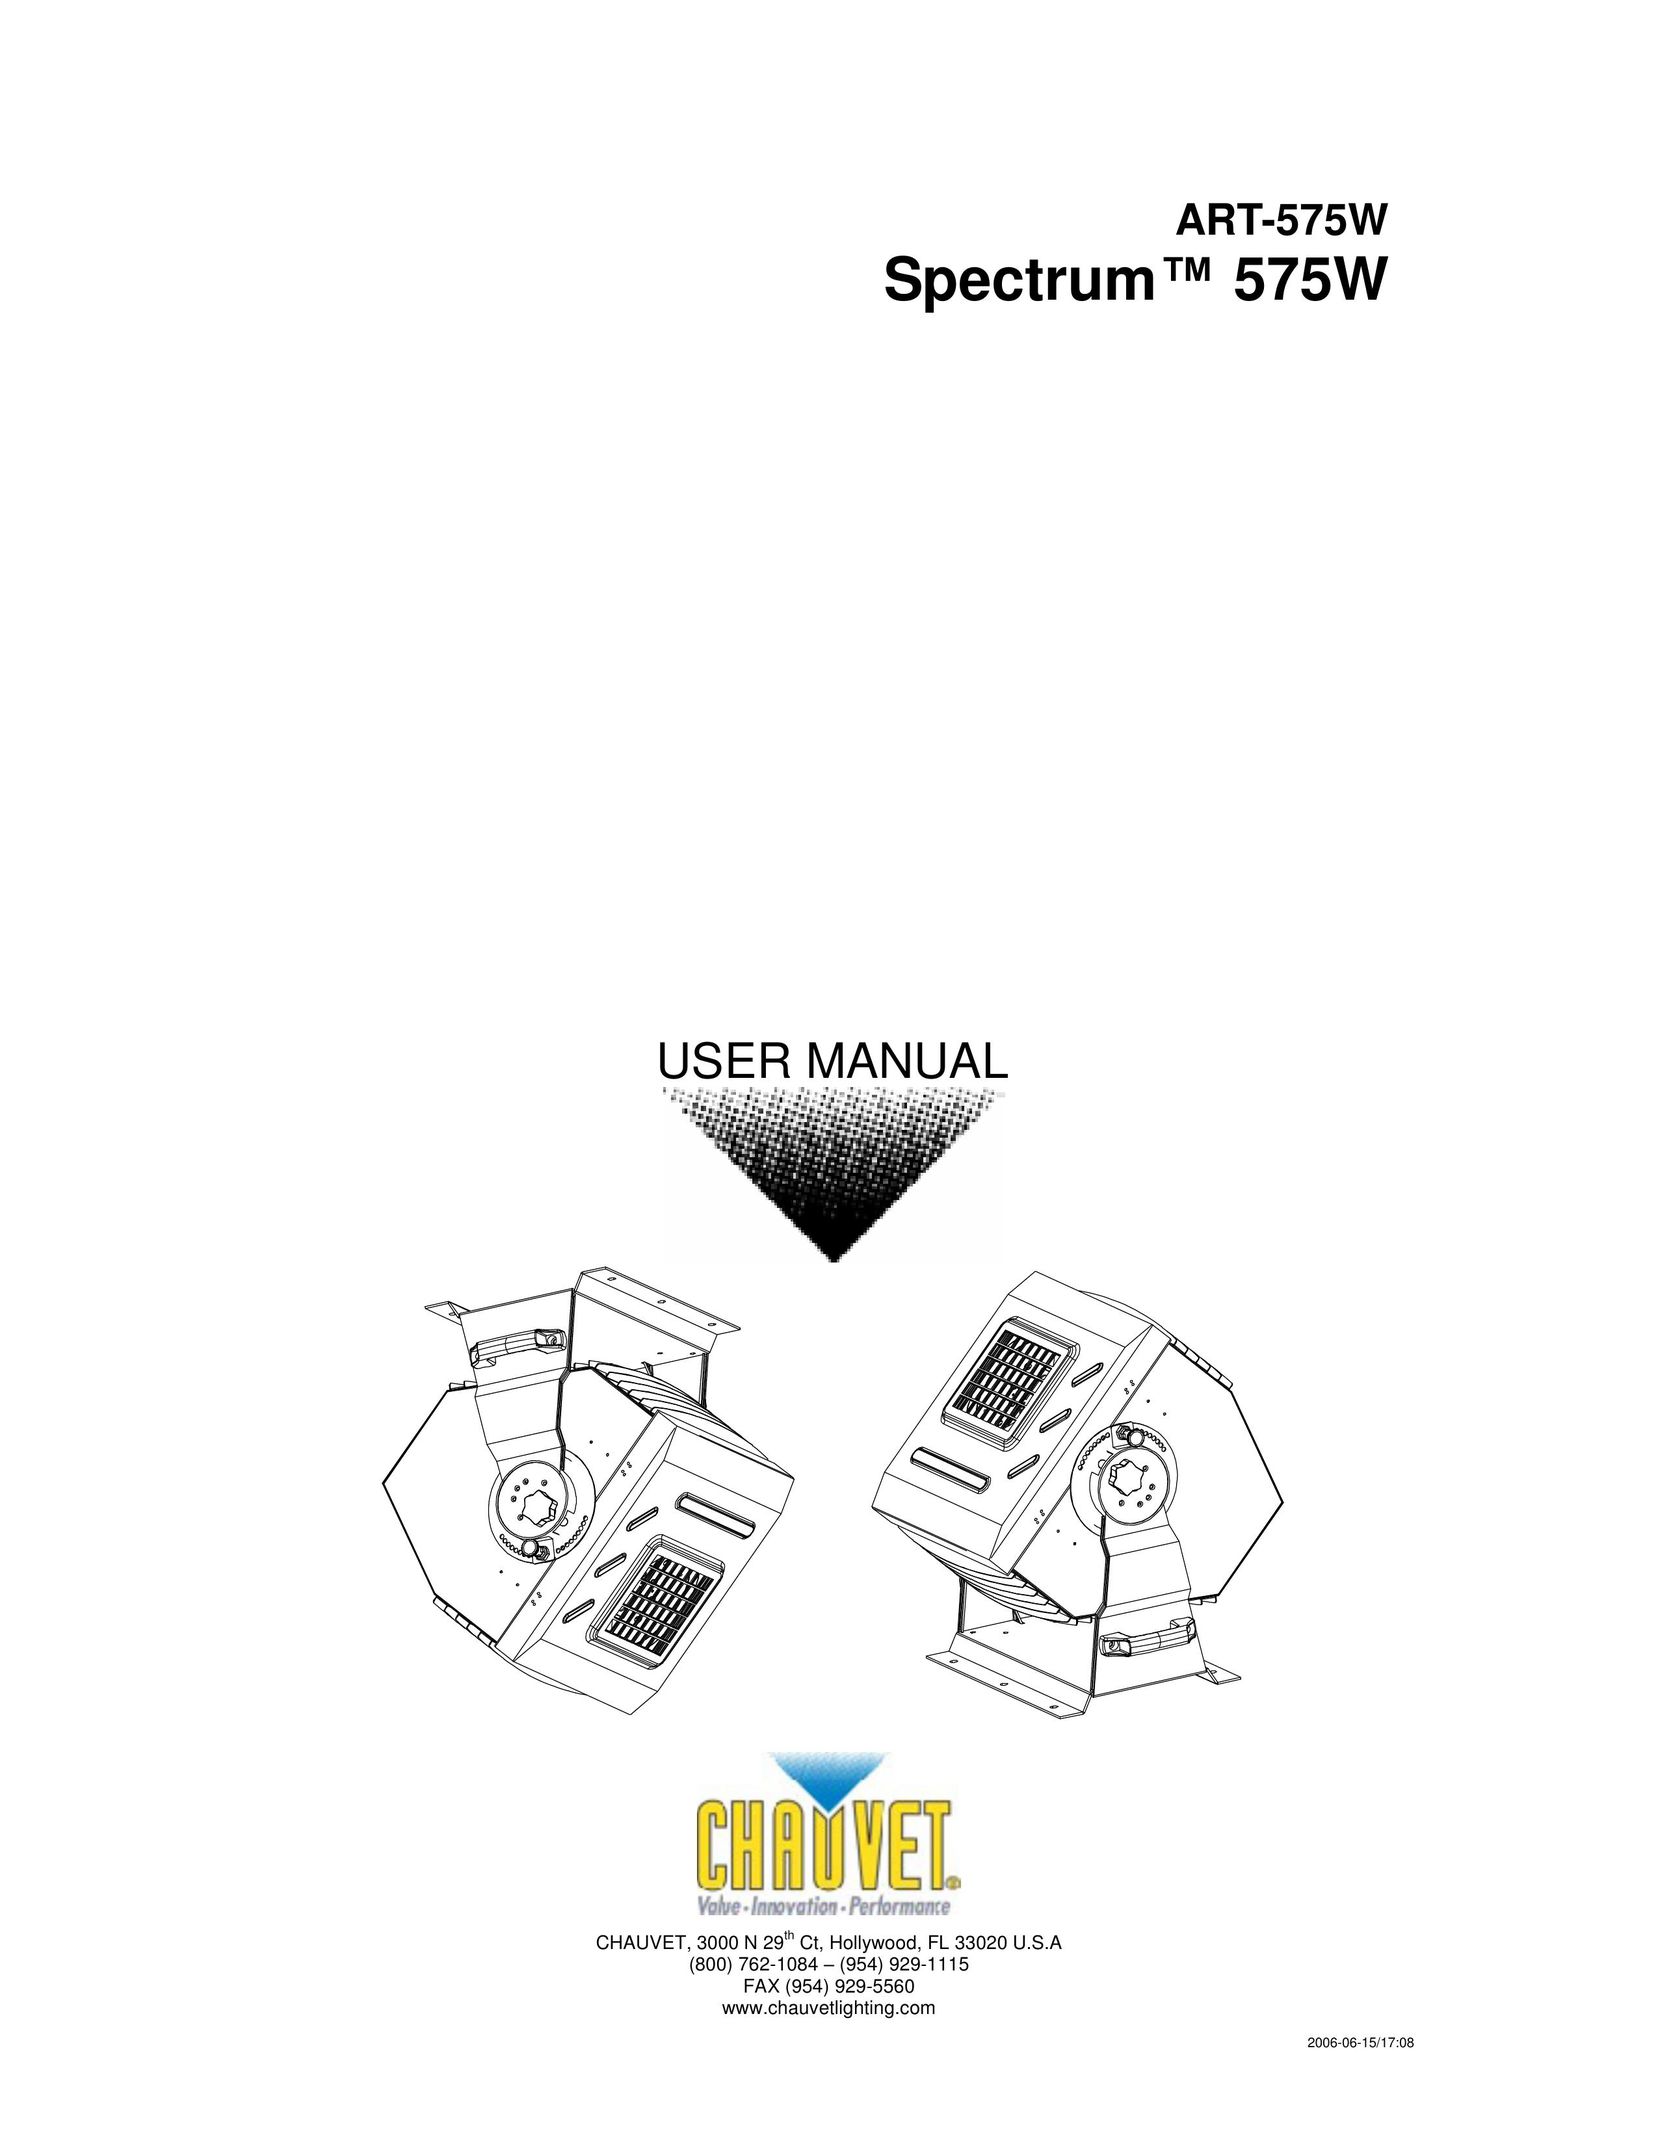 Chauvet ART-575W Webcam User Manual